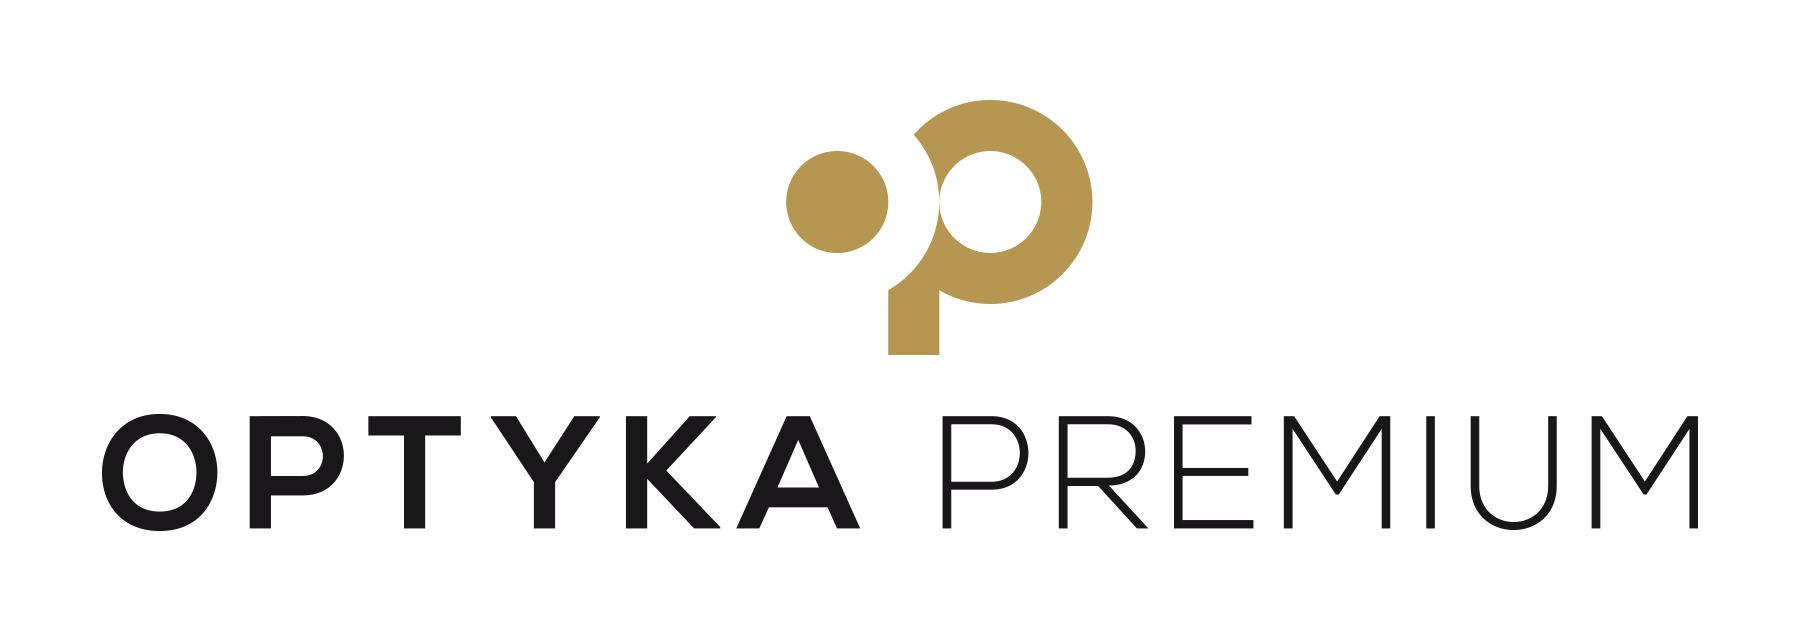 Optyka premium - logo